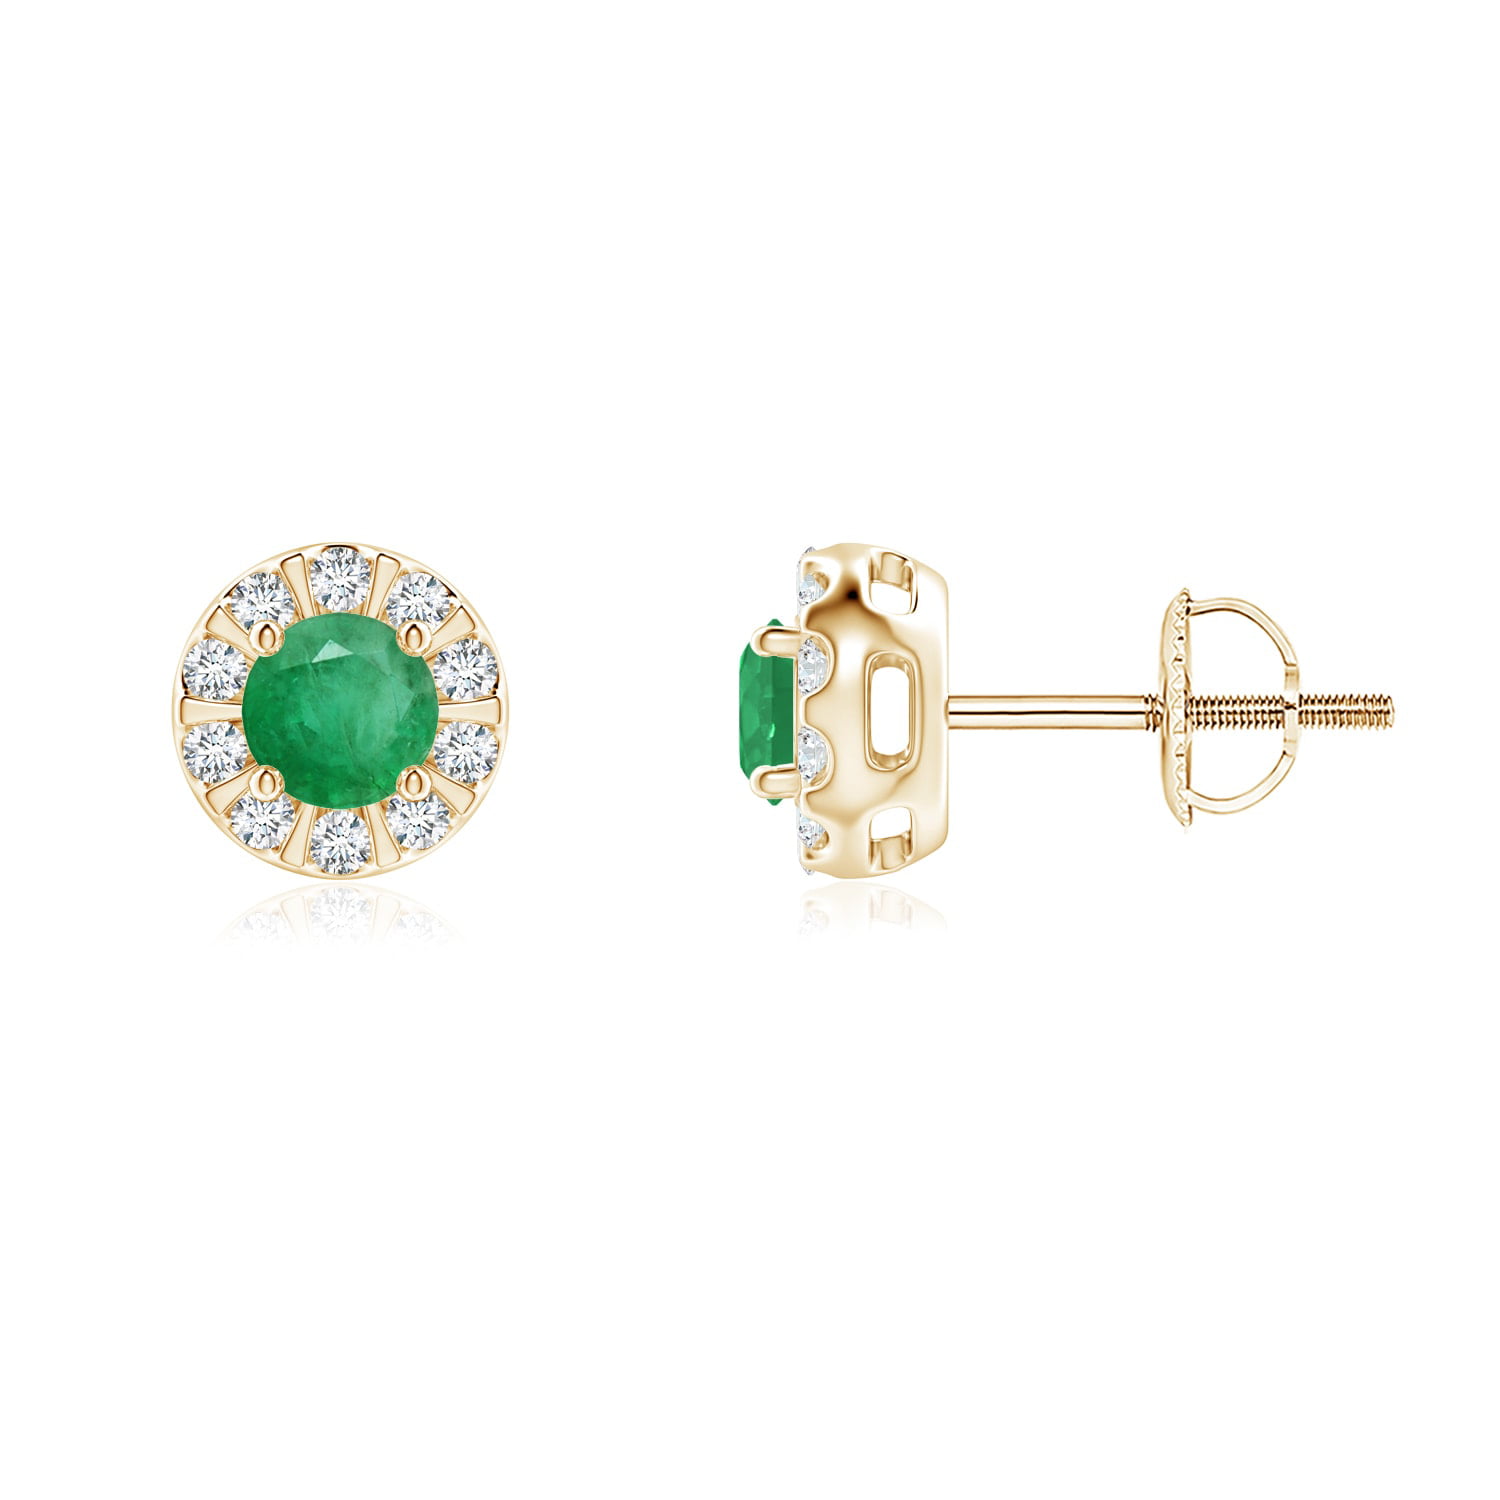 tw May Birthstone Emerald and 1/4 ct Diamond Drop Earrings in 10K Yellow Gold